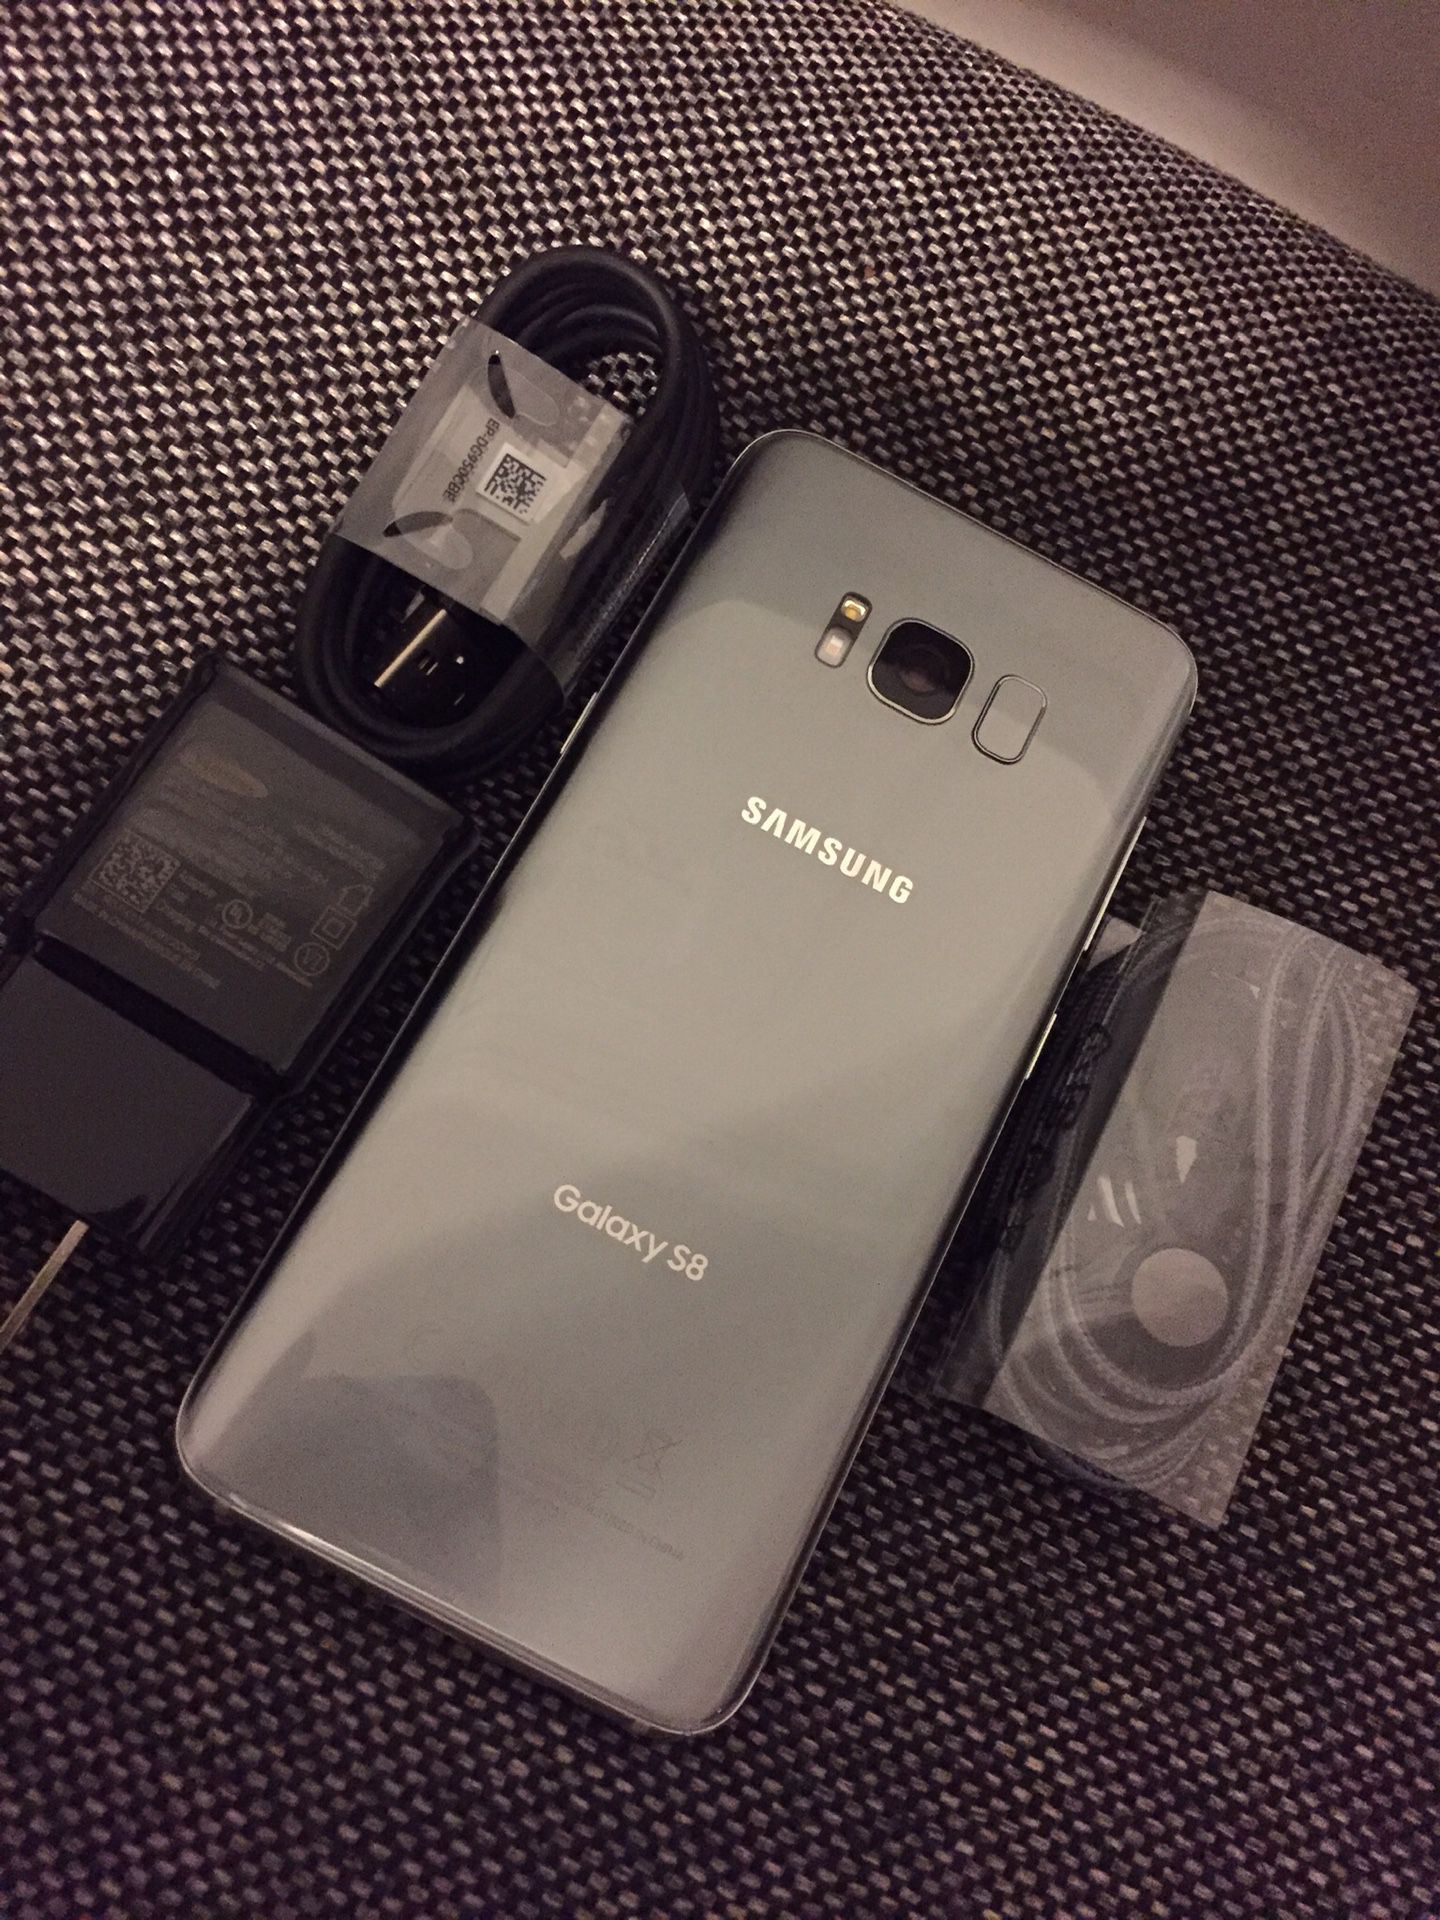 Samsung Galaxy S8 64GB Factory Unlocked Excellent Condition